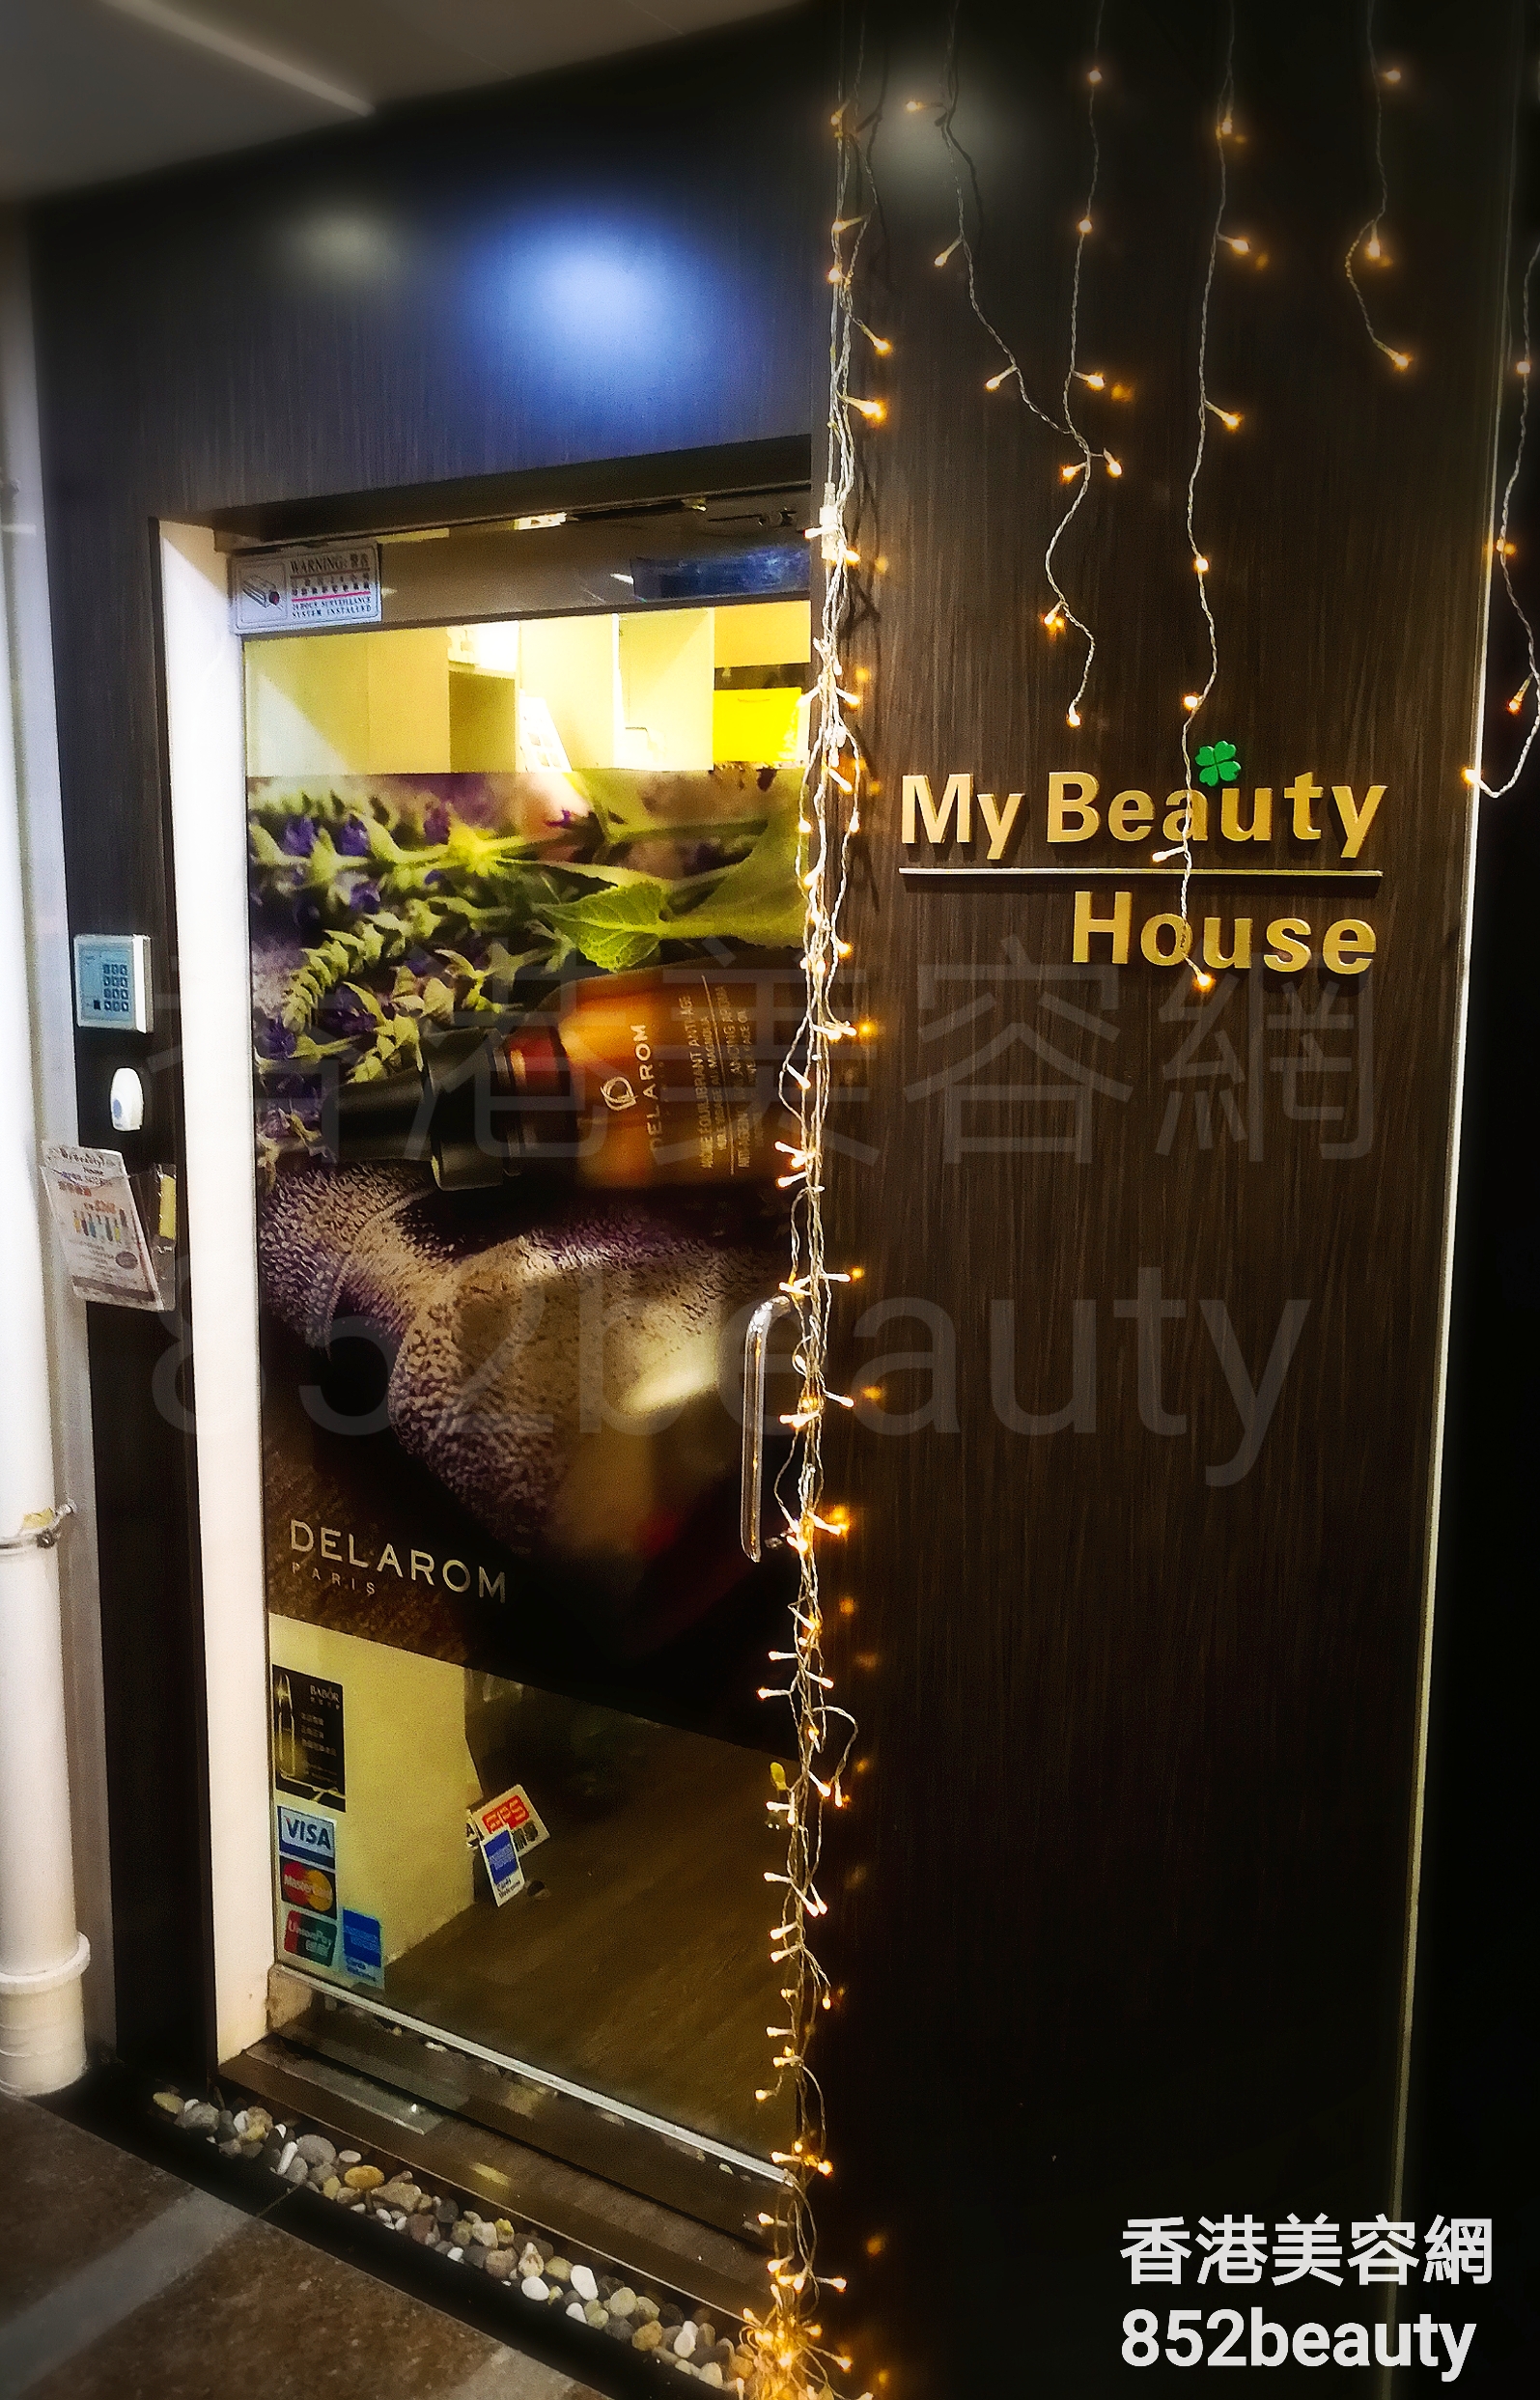 美容院 Beauty Salon: My Beauty House